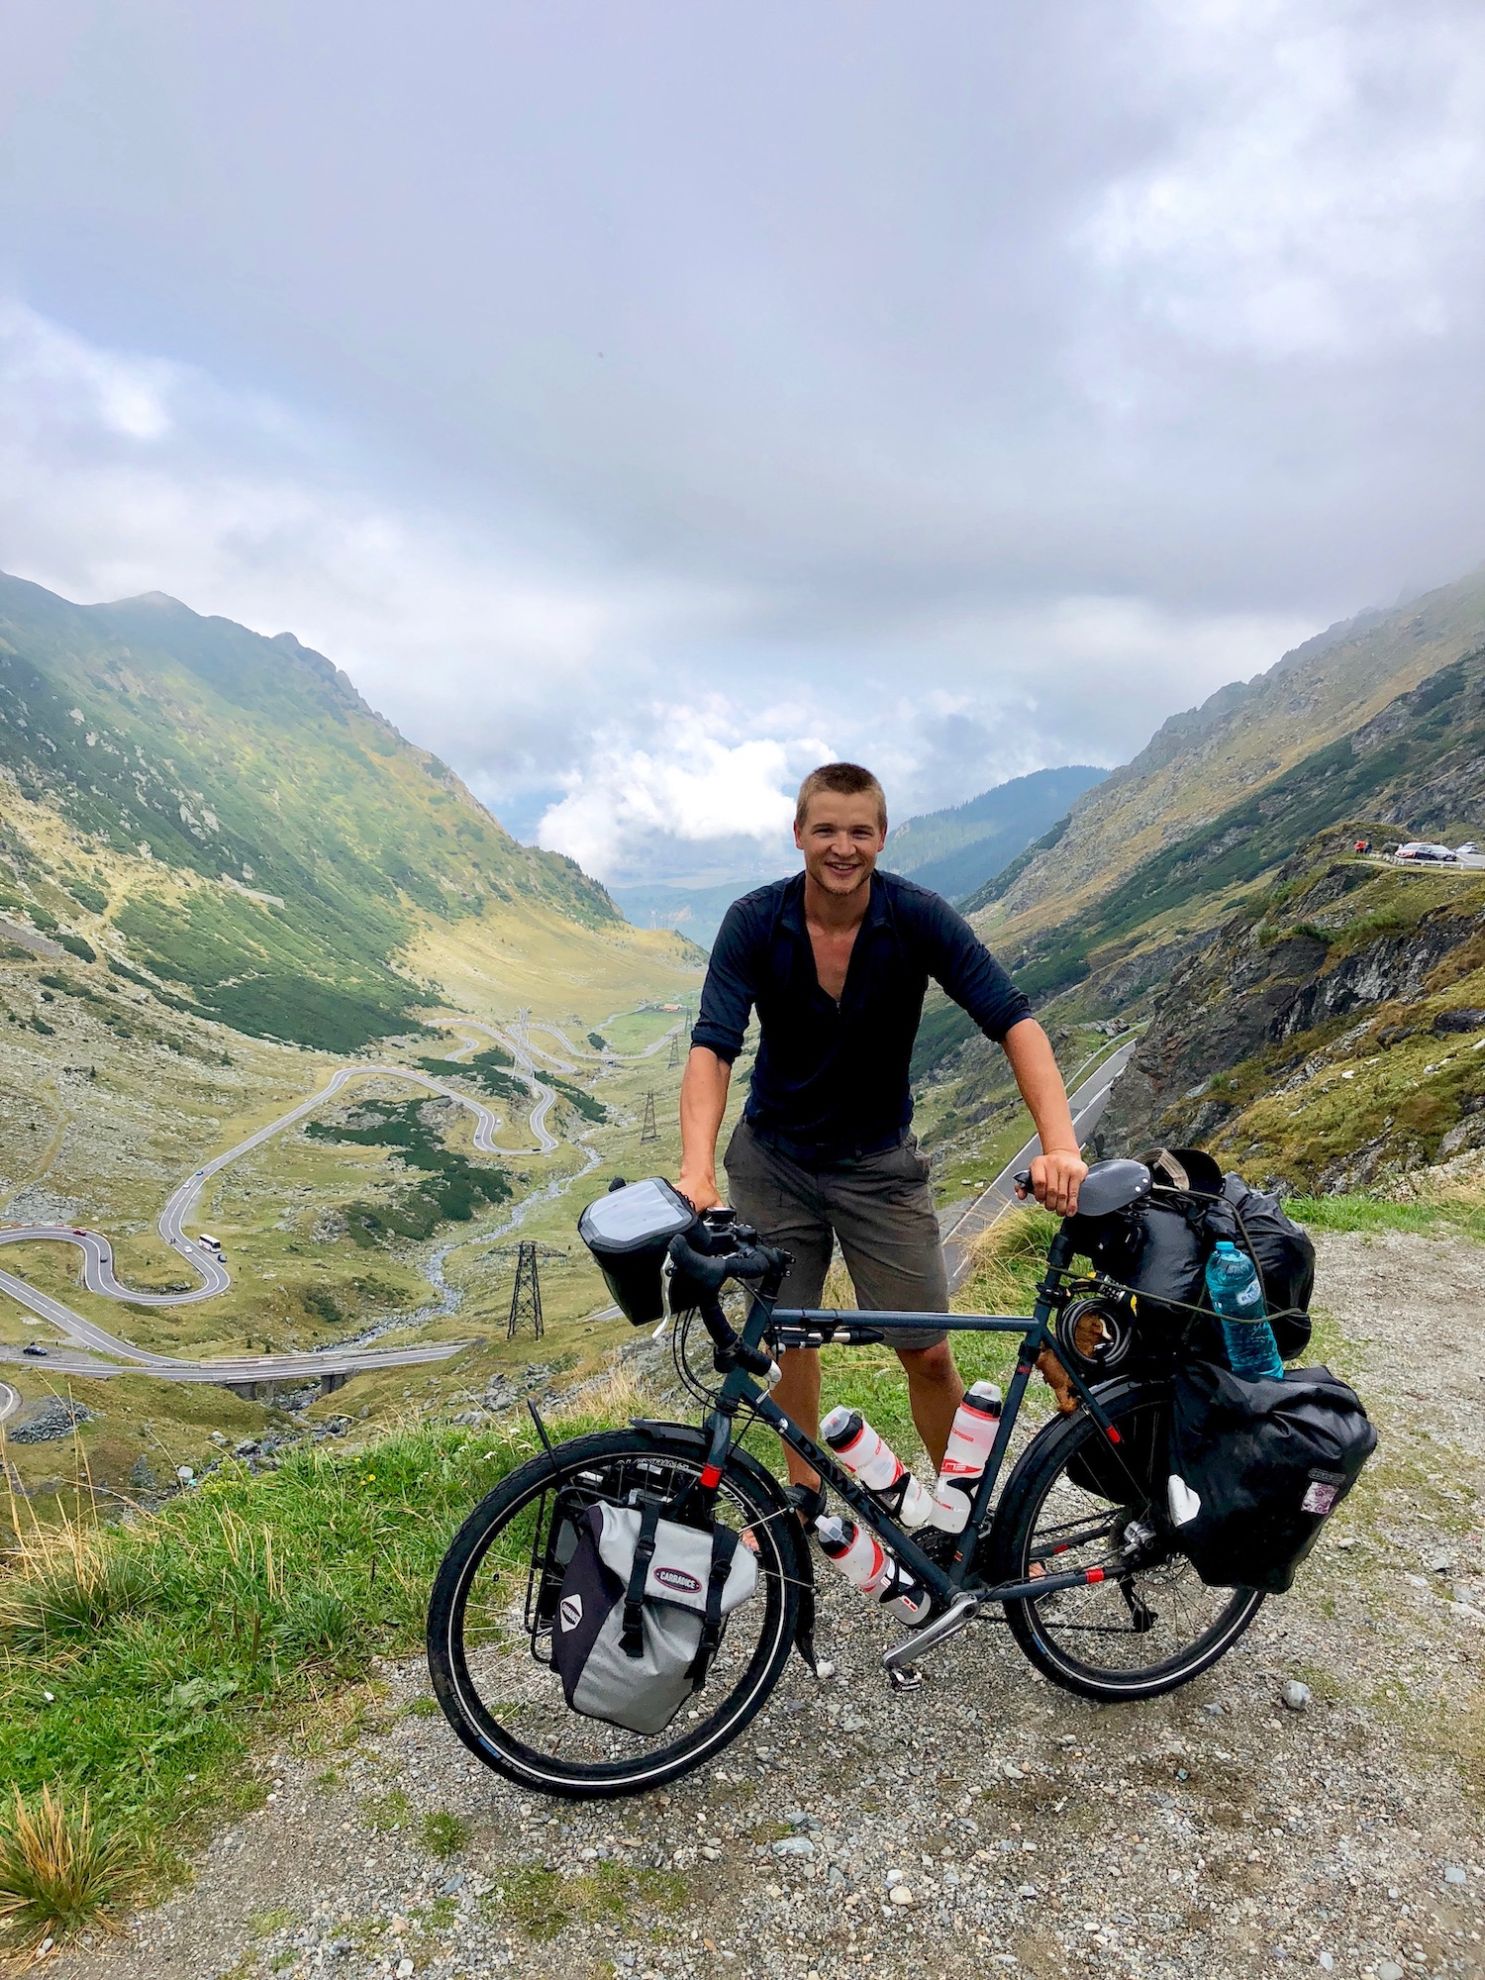 Author and adventurer Geordie Stewart posing with his bike on the Transfagarasan Highway